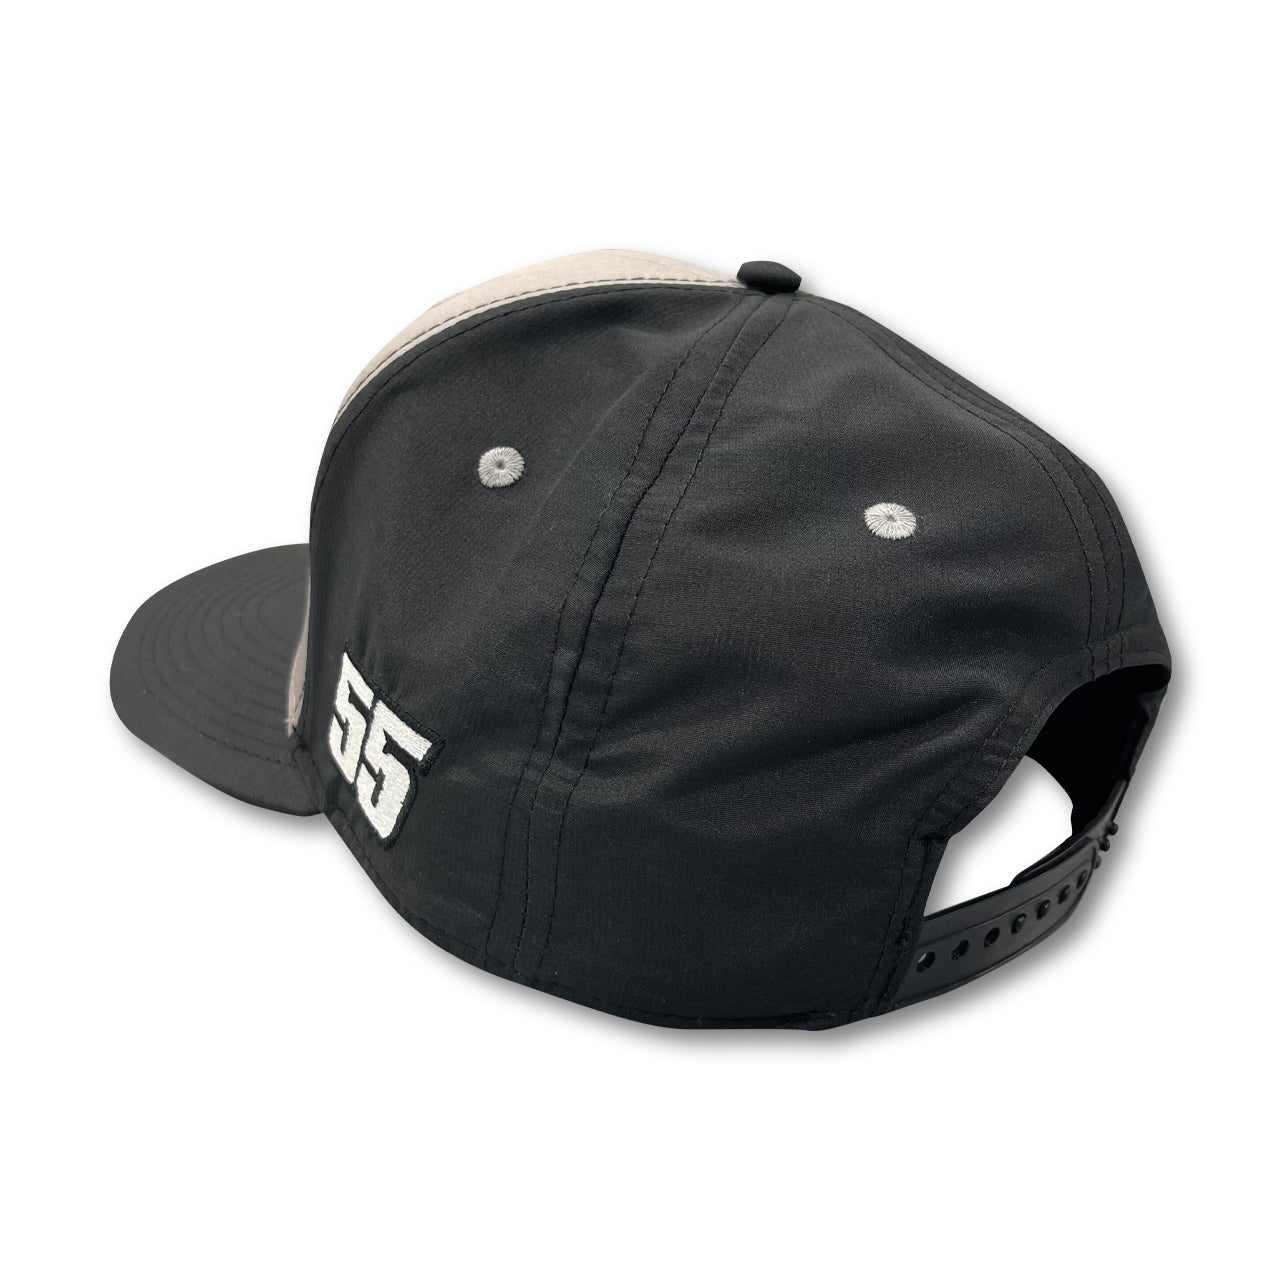 ABR Premium Snapback Hat -  Grey